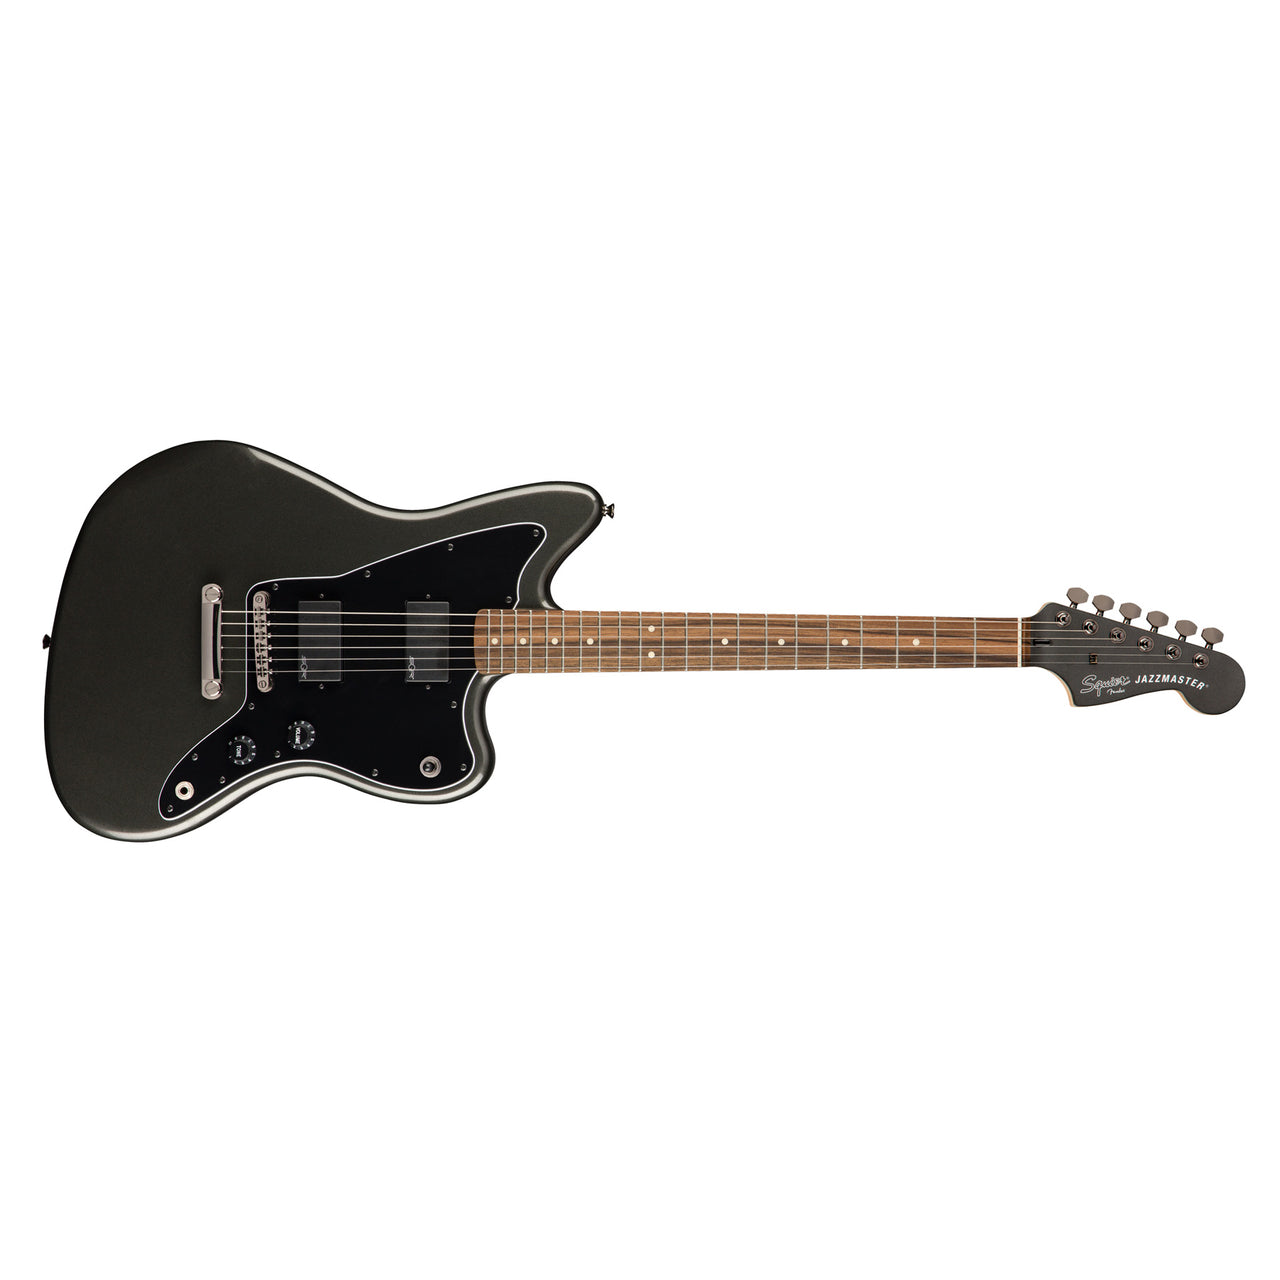 Guitarra Electrica Fender Contemporary Jazzmaster St Lrl Grm 0370330569